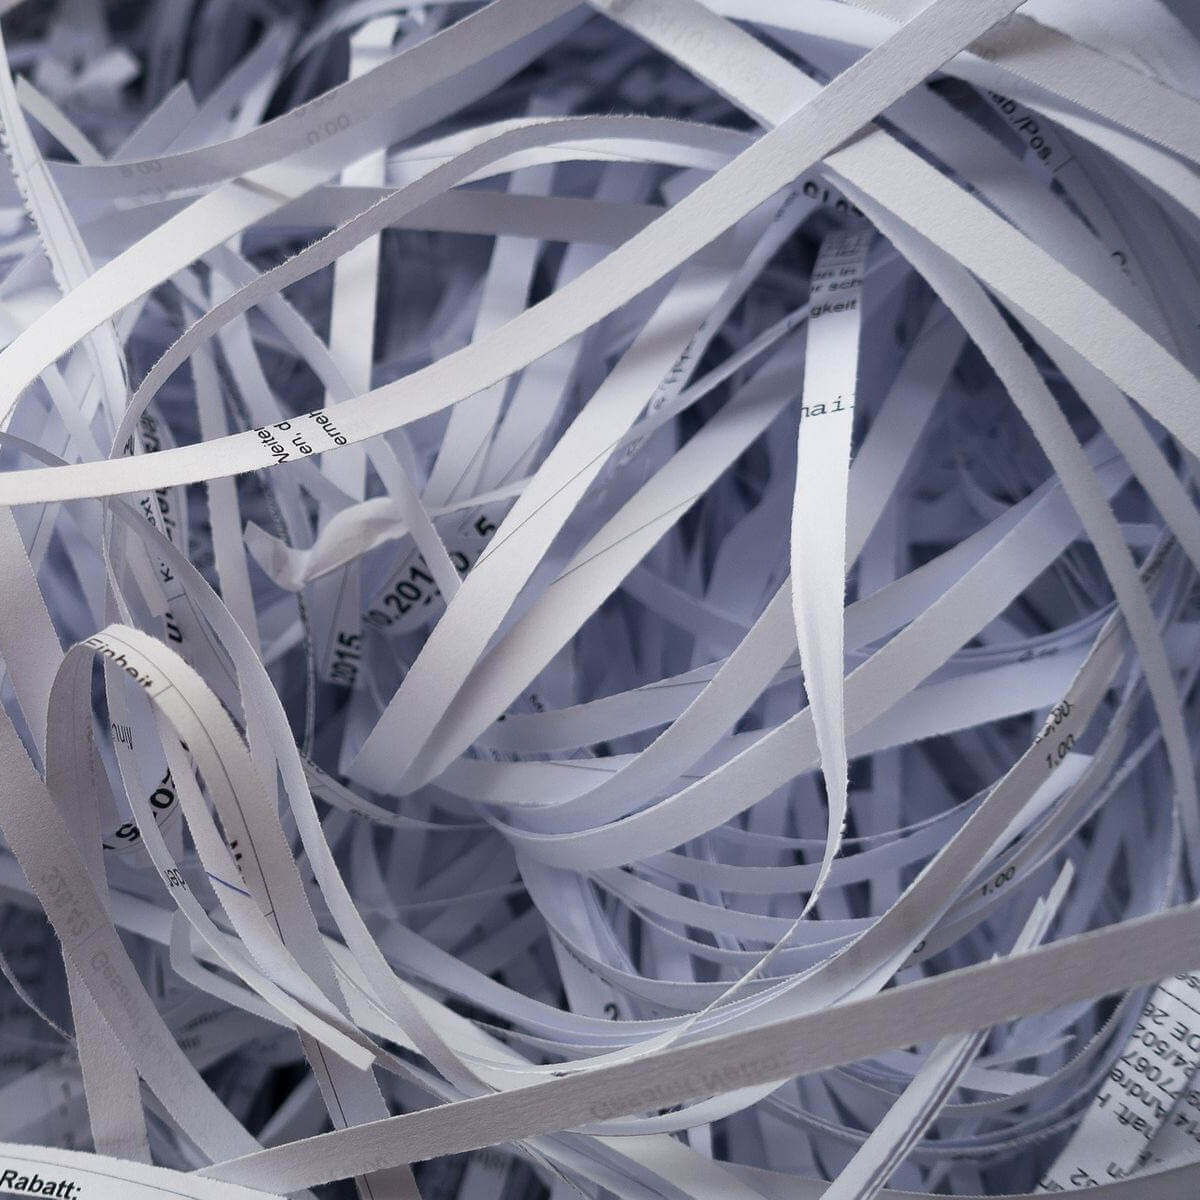 Black friday micro-cut paper shredders - shredded paper